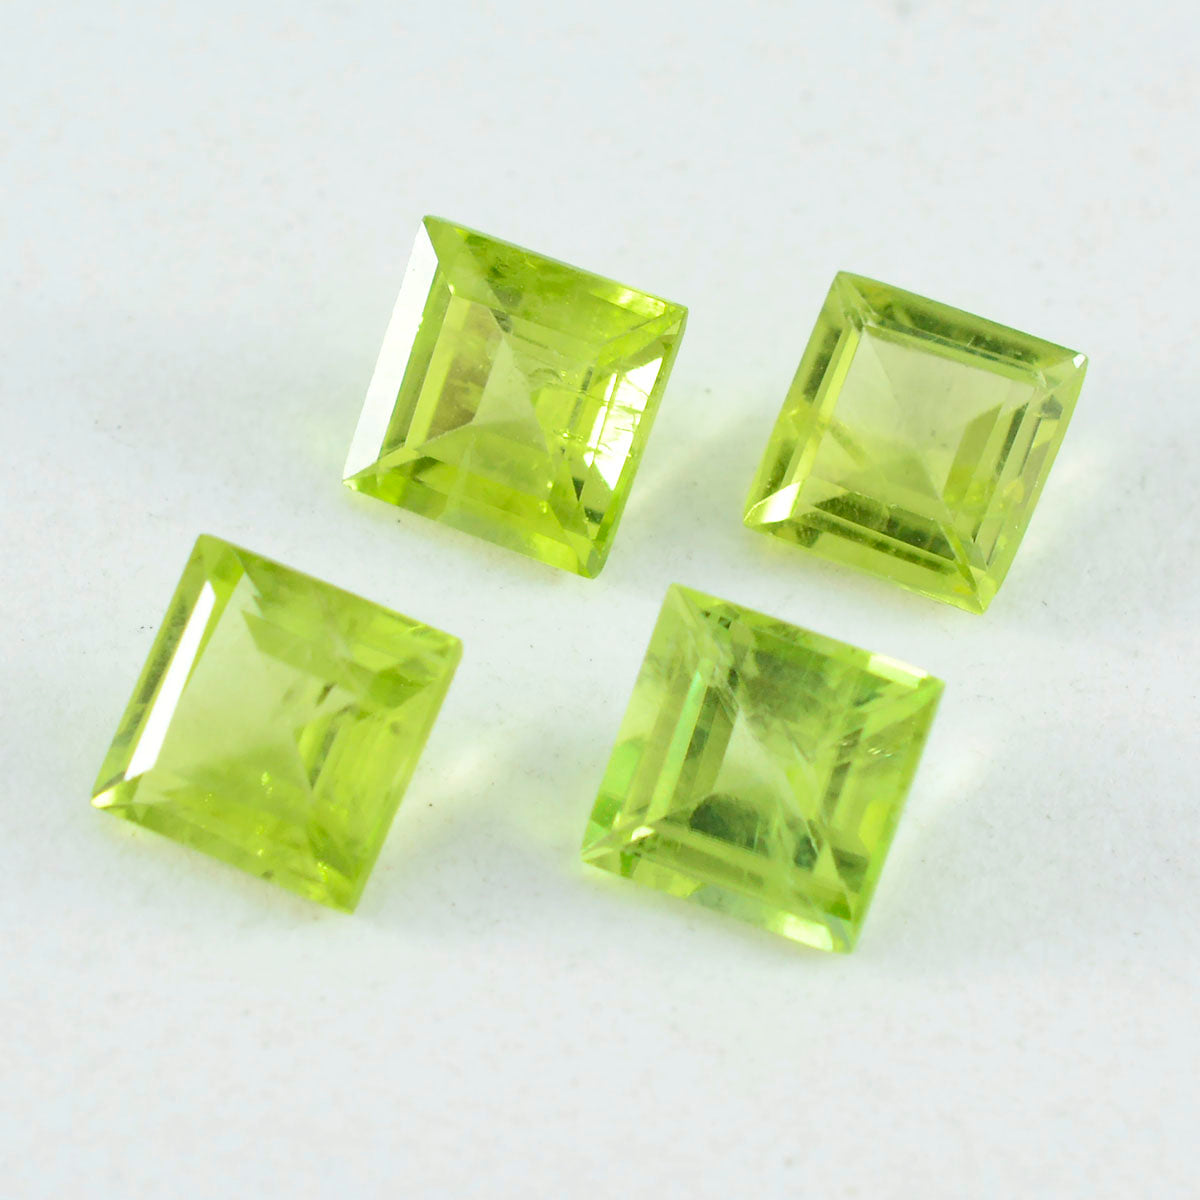 Riyogems 1PC Genuine Green Peridot Faceted 12x12 mm Square Shape fantastic Quality Loose Stone